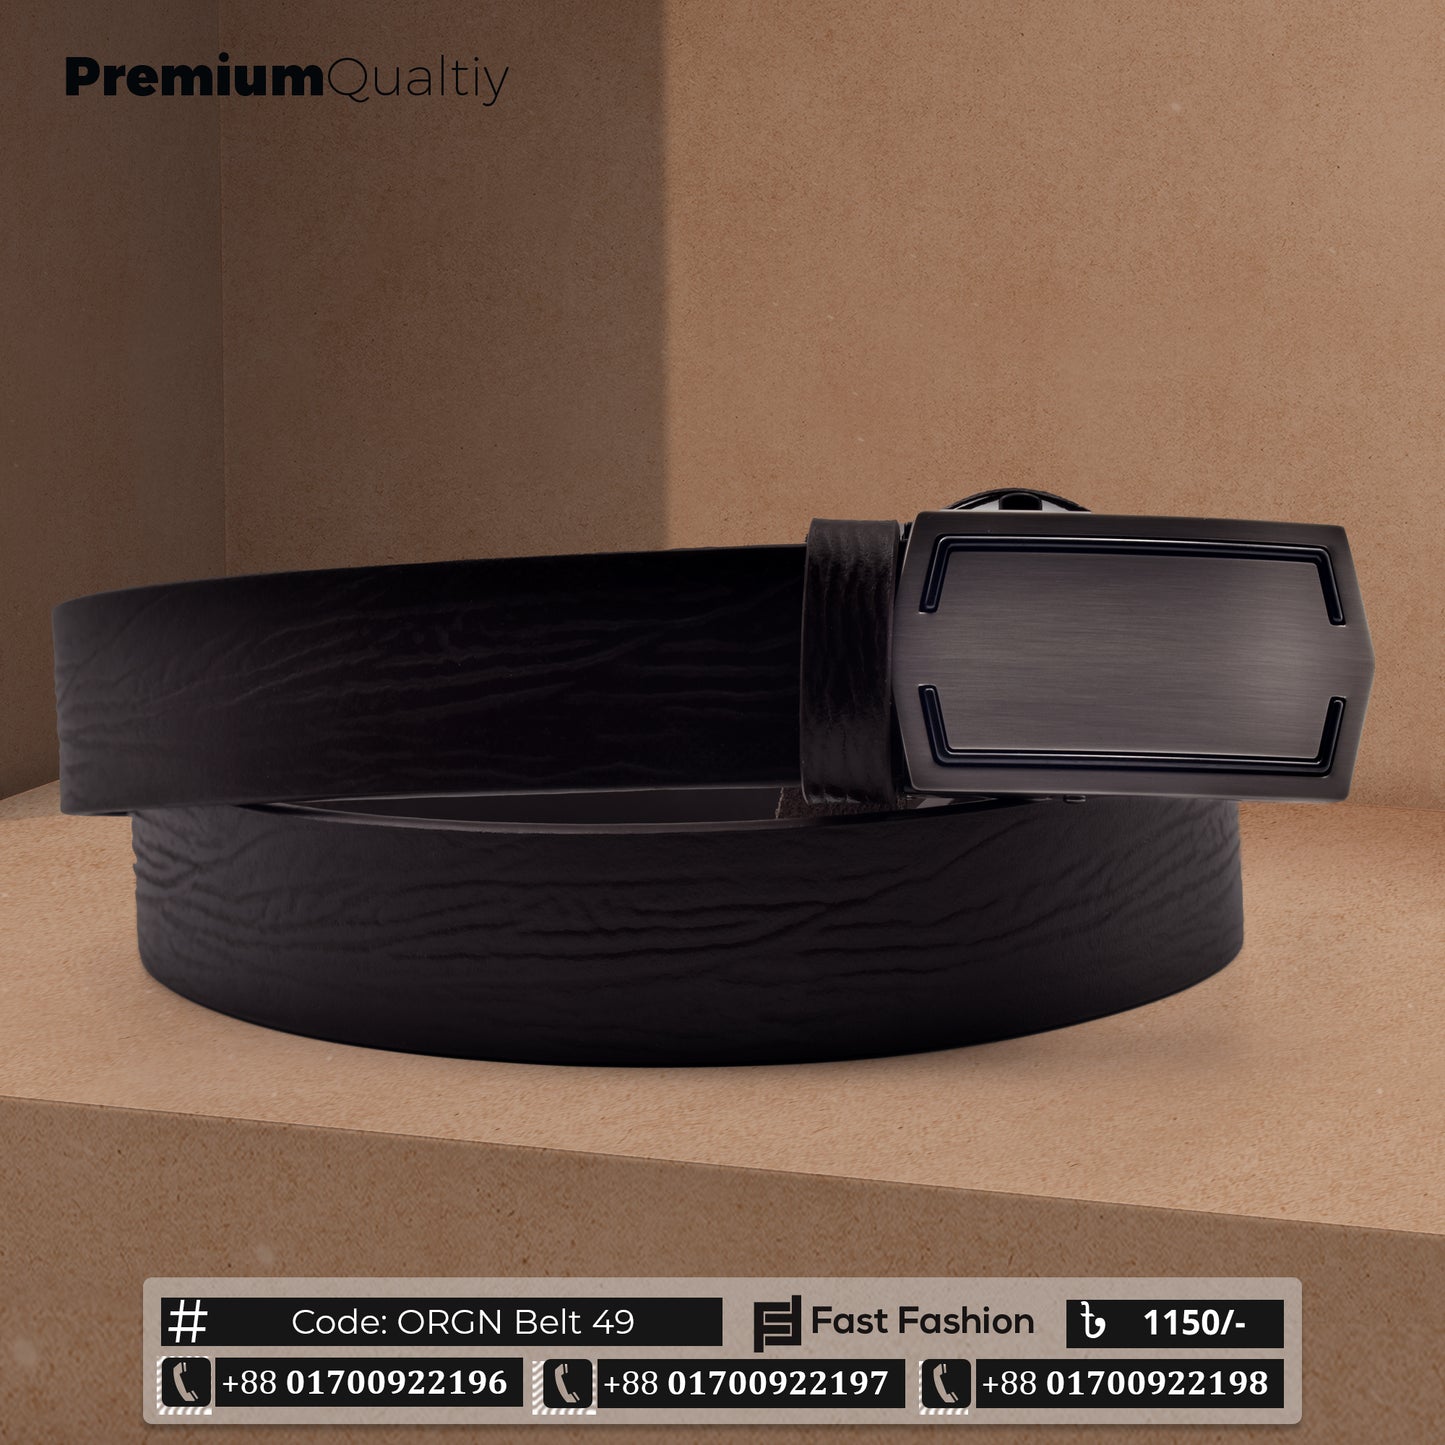 Premium Quality Original Leather Belt - ORGN Belt 49